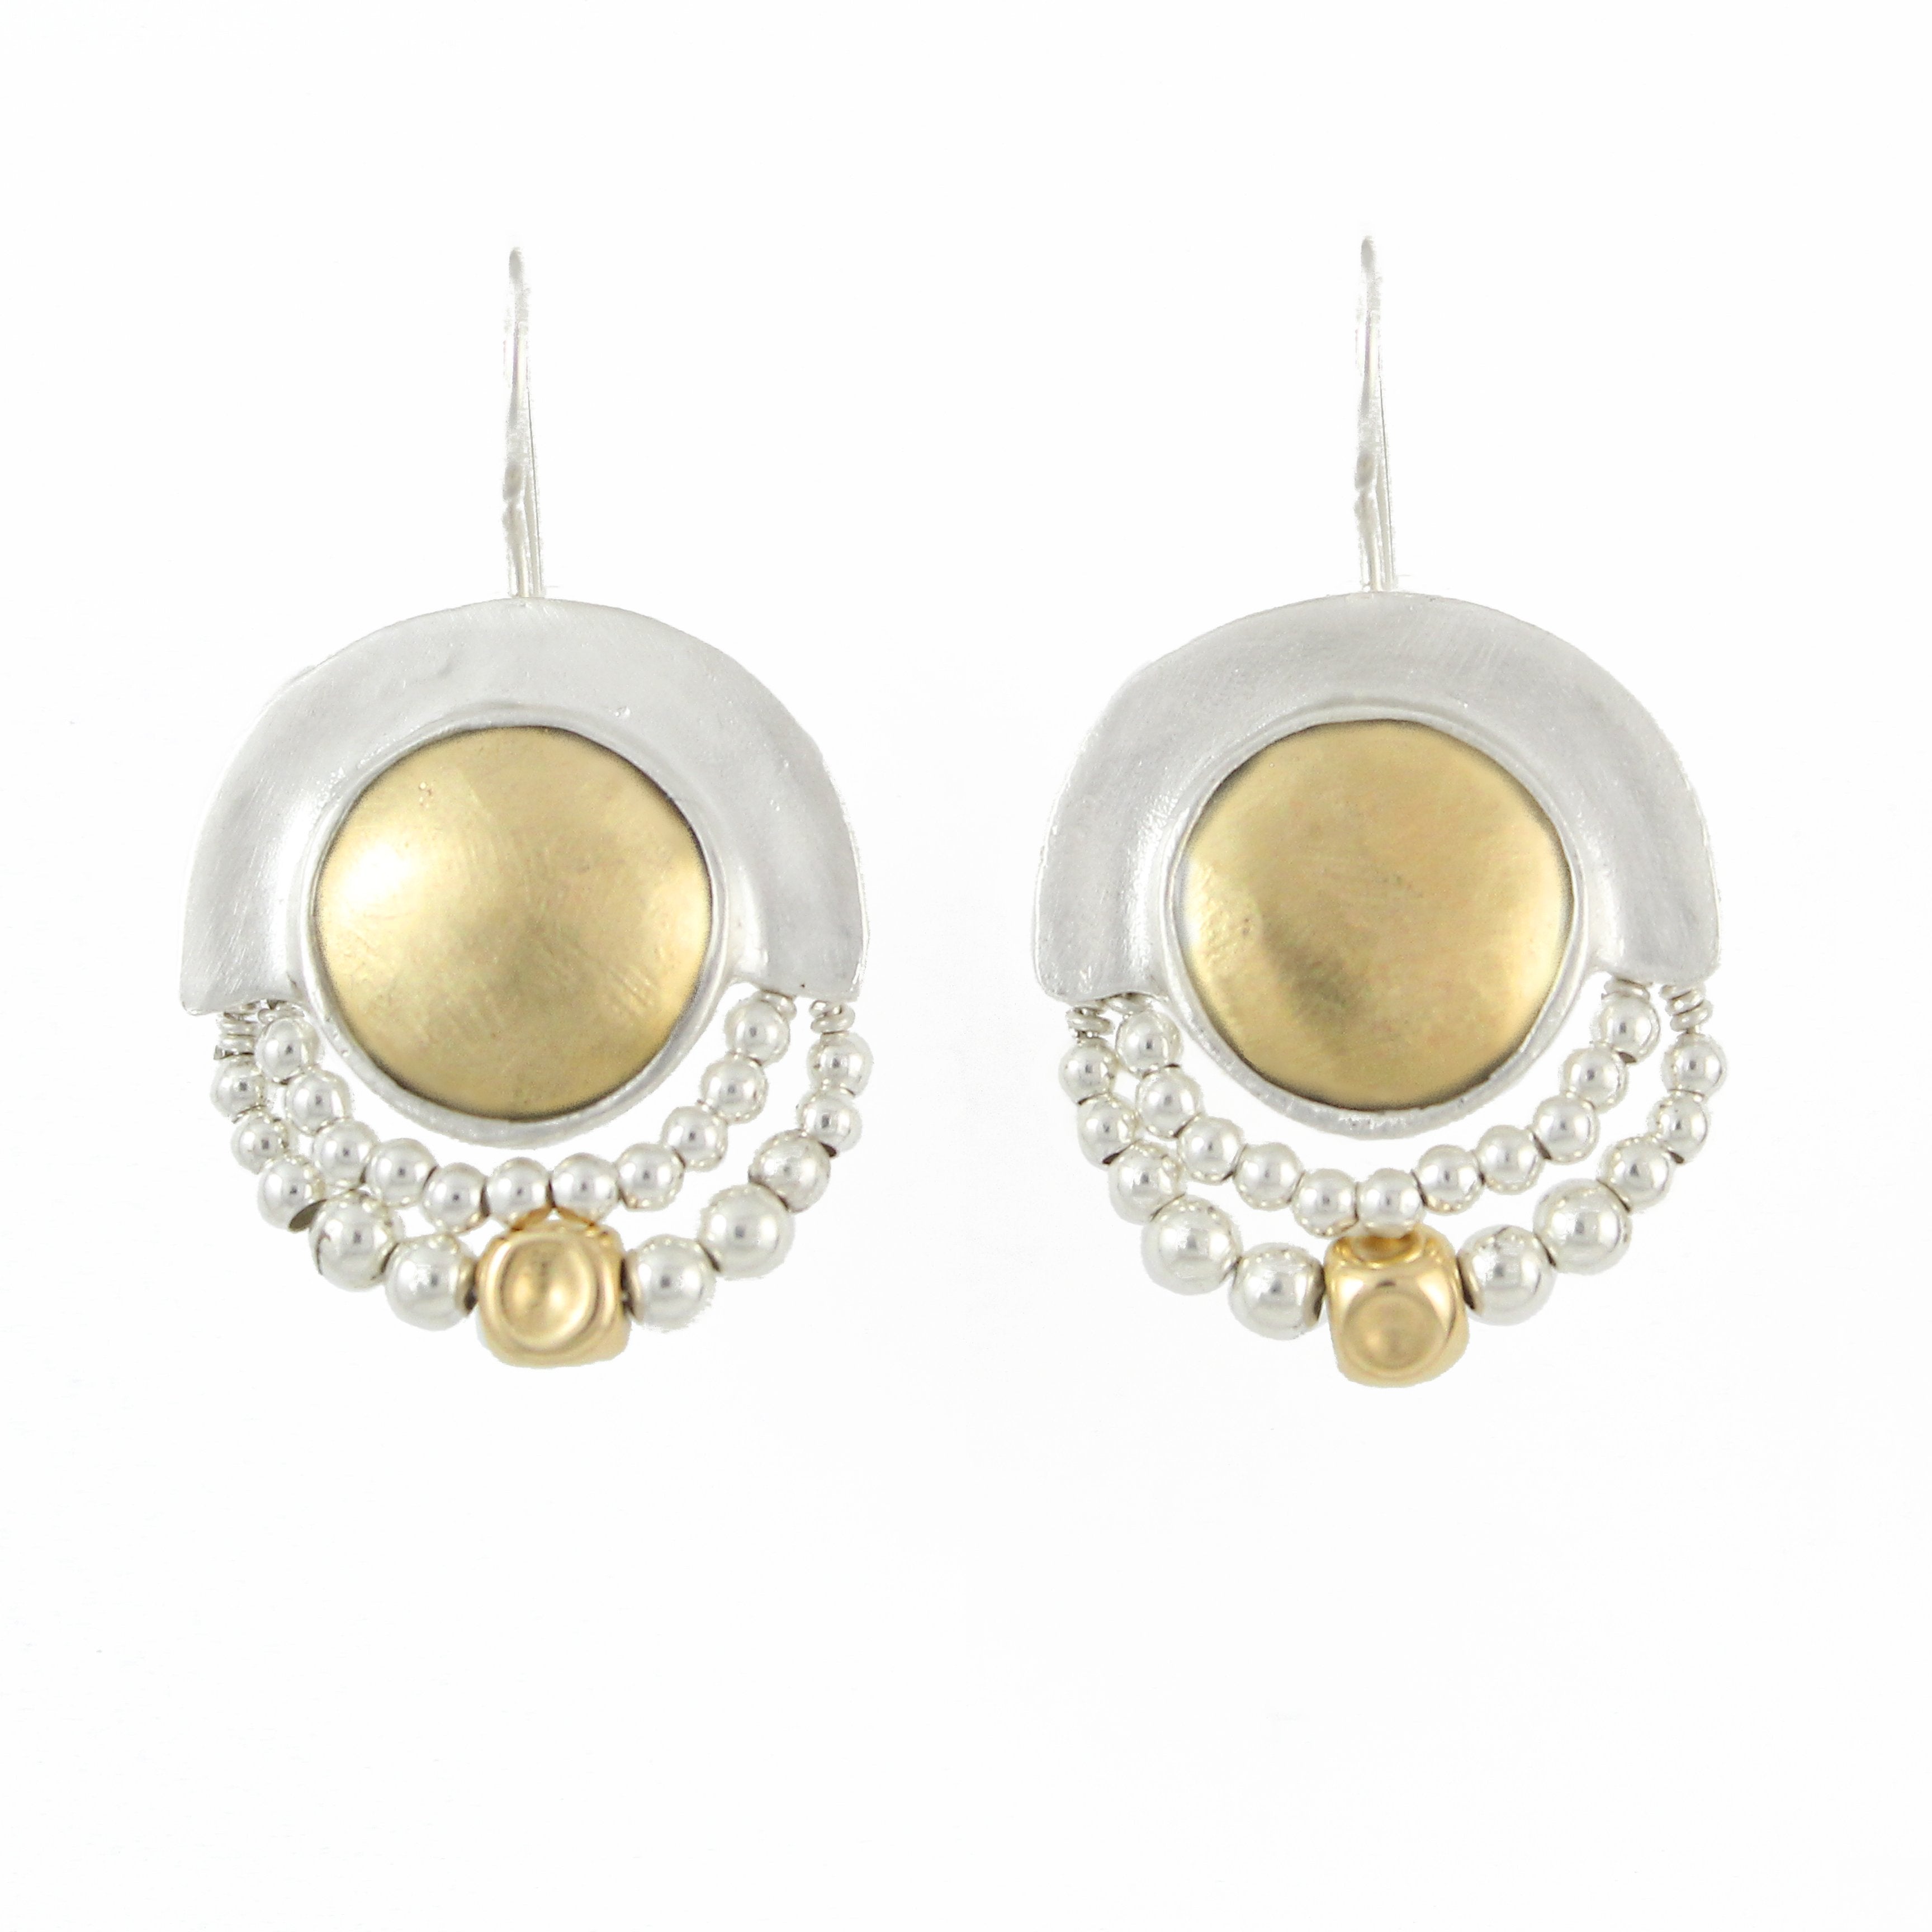 Elegant Bohemian Style Silver & Gold Filled Medium Earrings - Shulamit Kanter